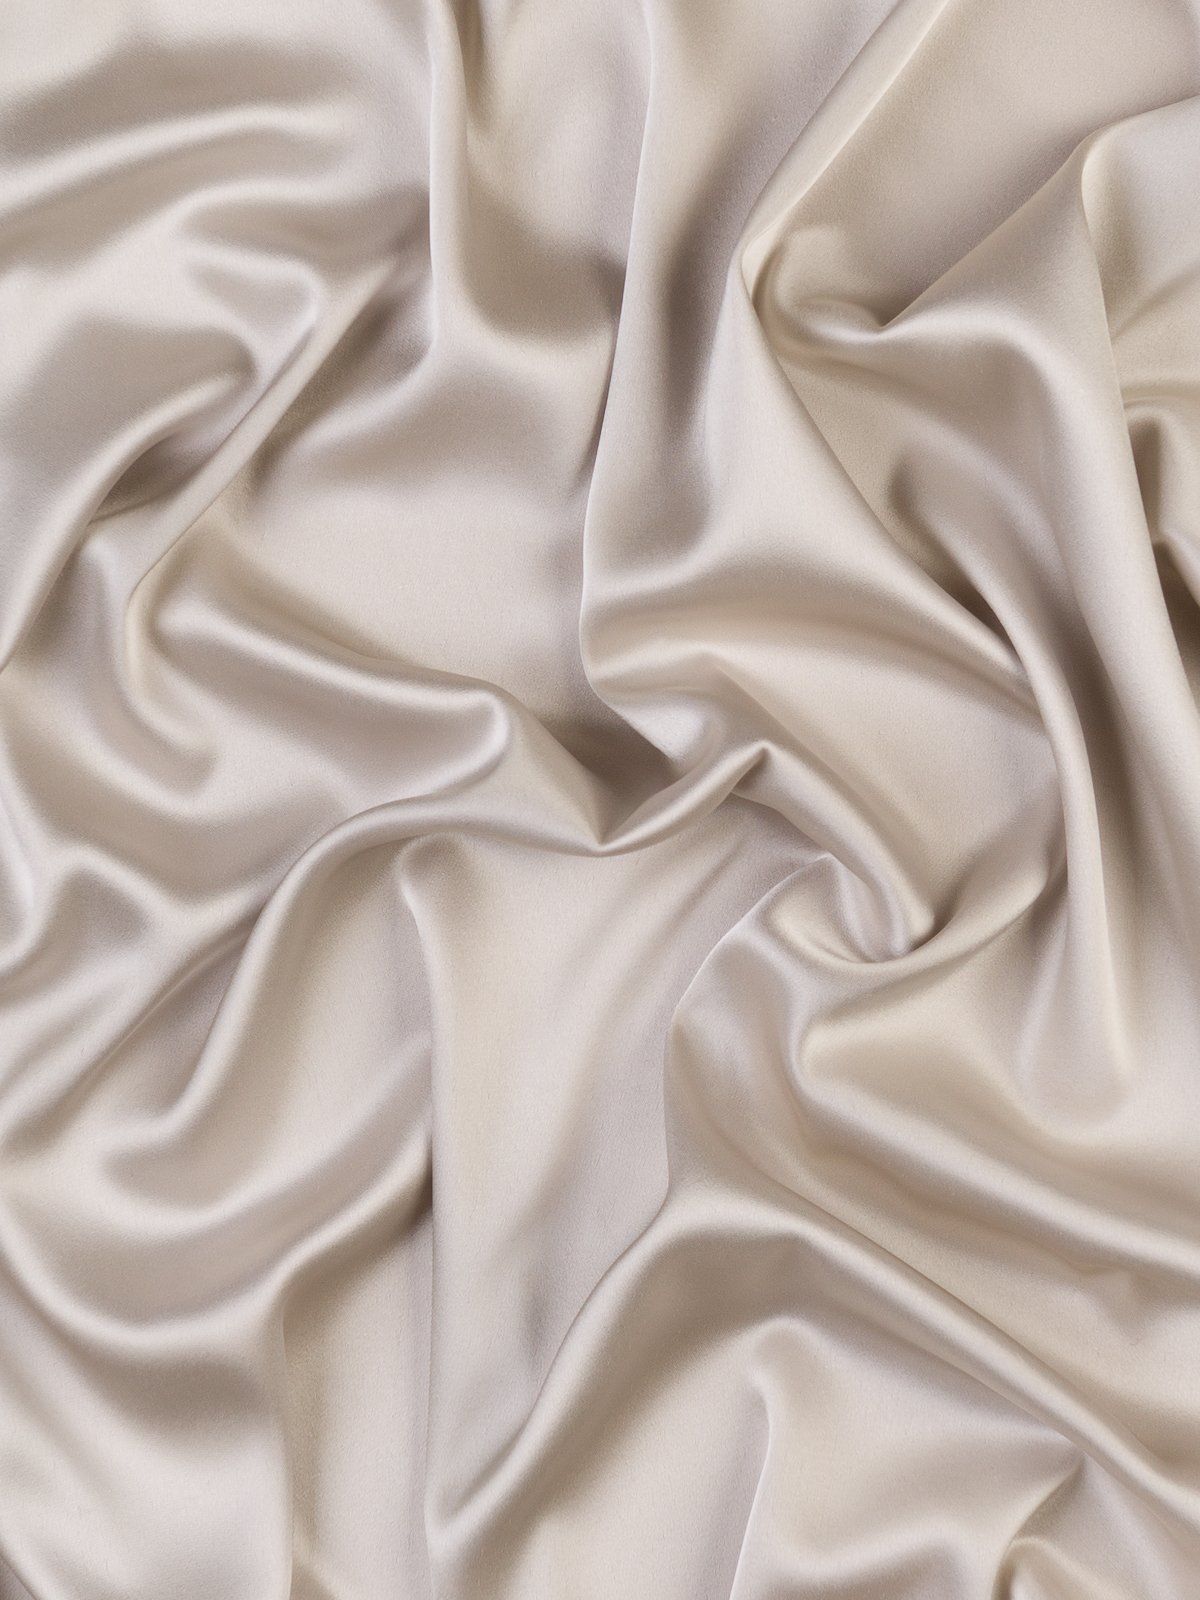 Nurturing Elegance: Vazasilk's 22 Momme Silk Zippered Pillowcase Care